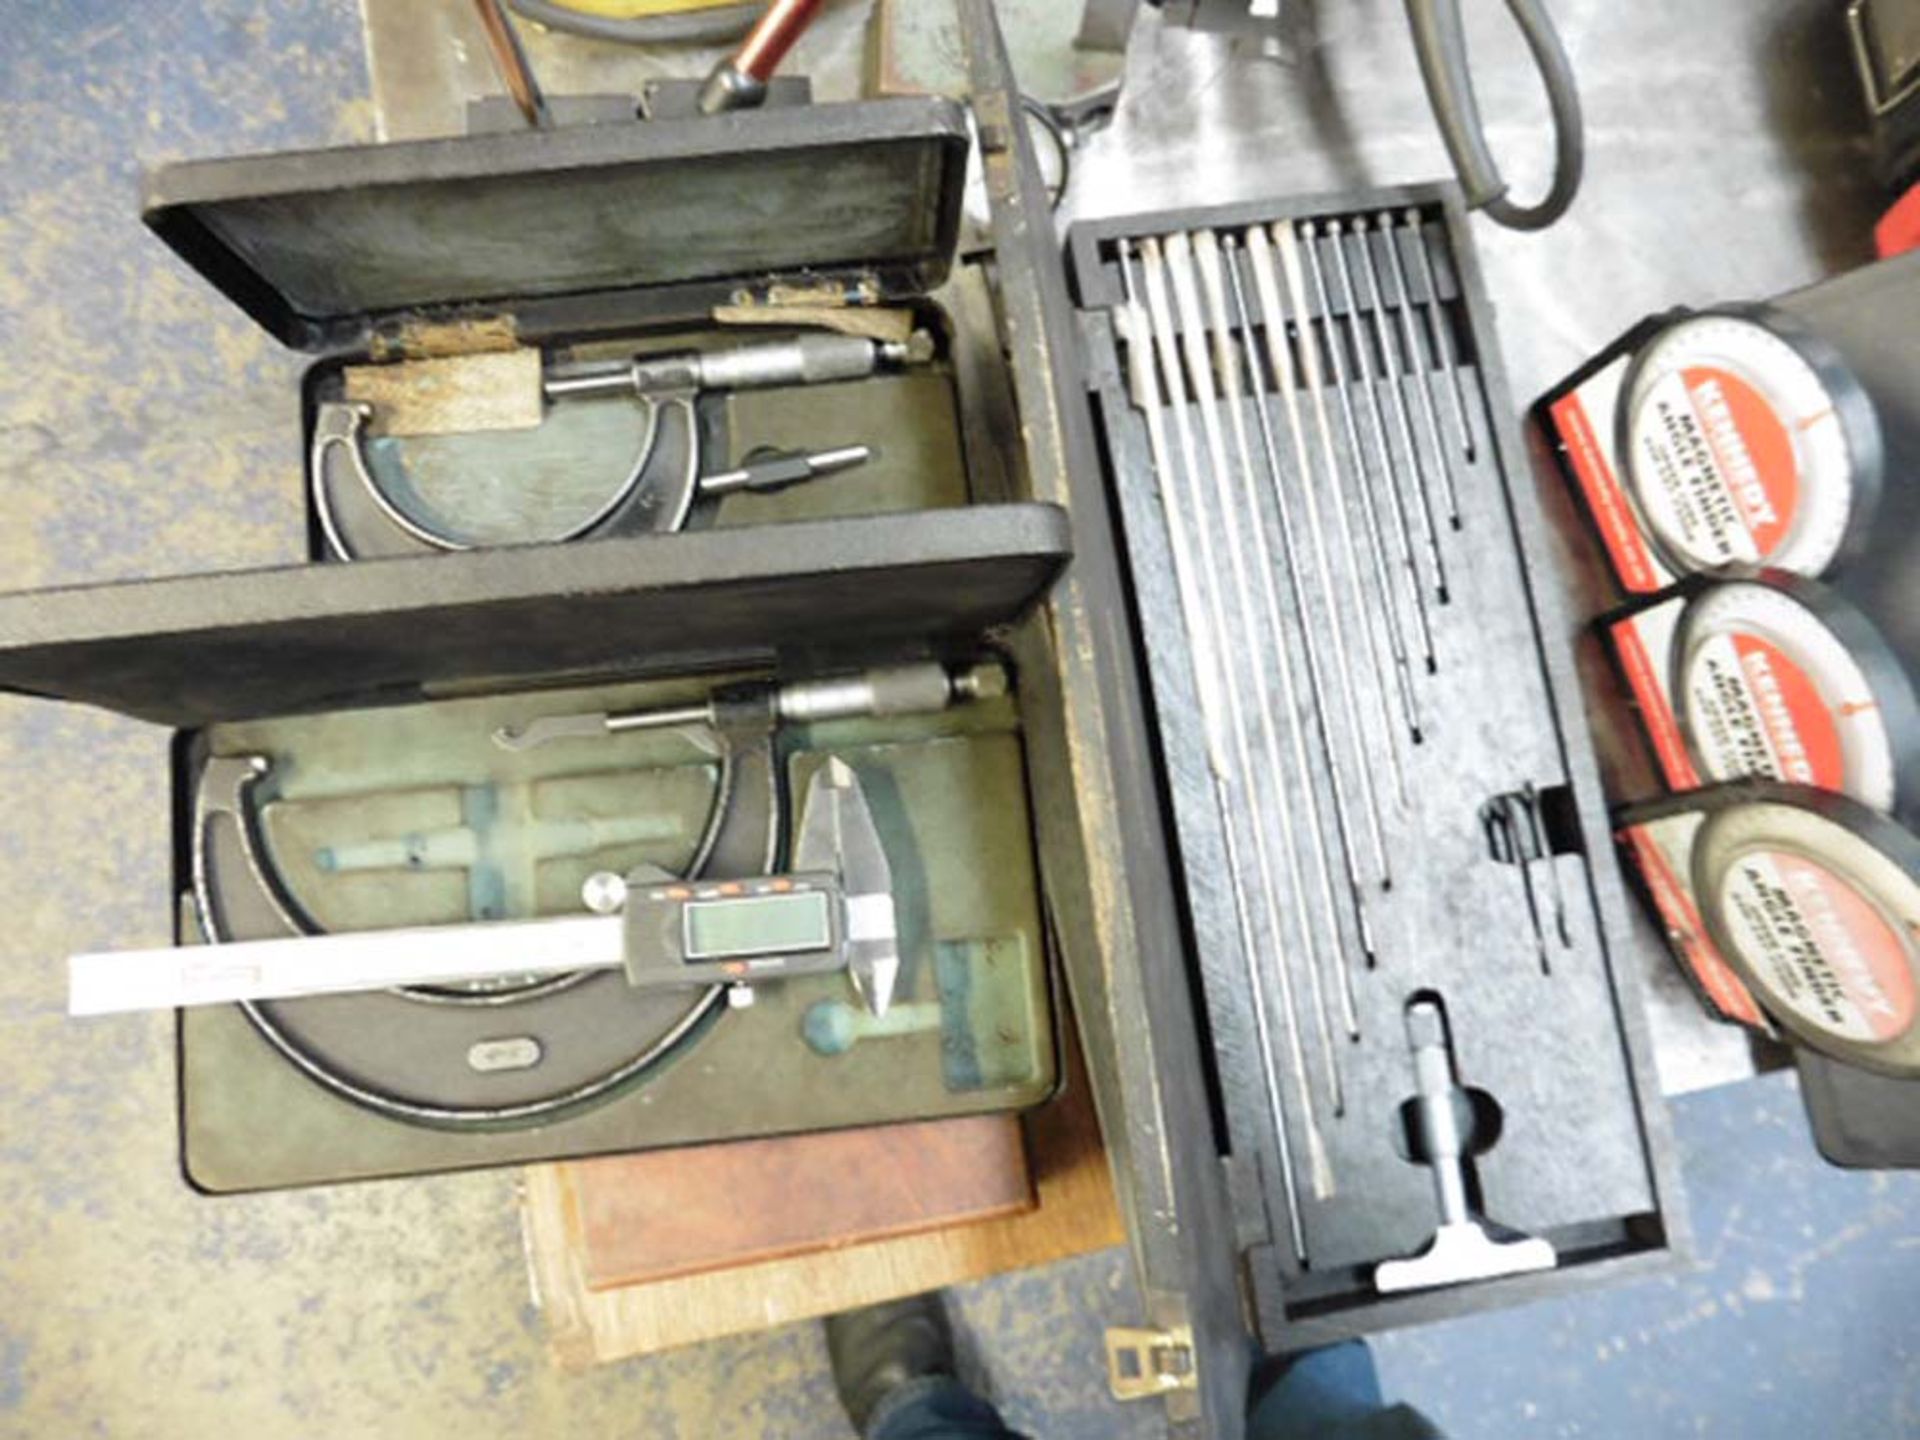 A range of micrometres digital vernier, Mitutoyo vernier calipers, Moore & Wright depth gauge set, - Image 2 of 2